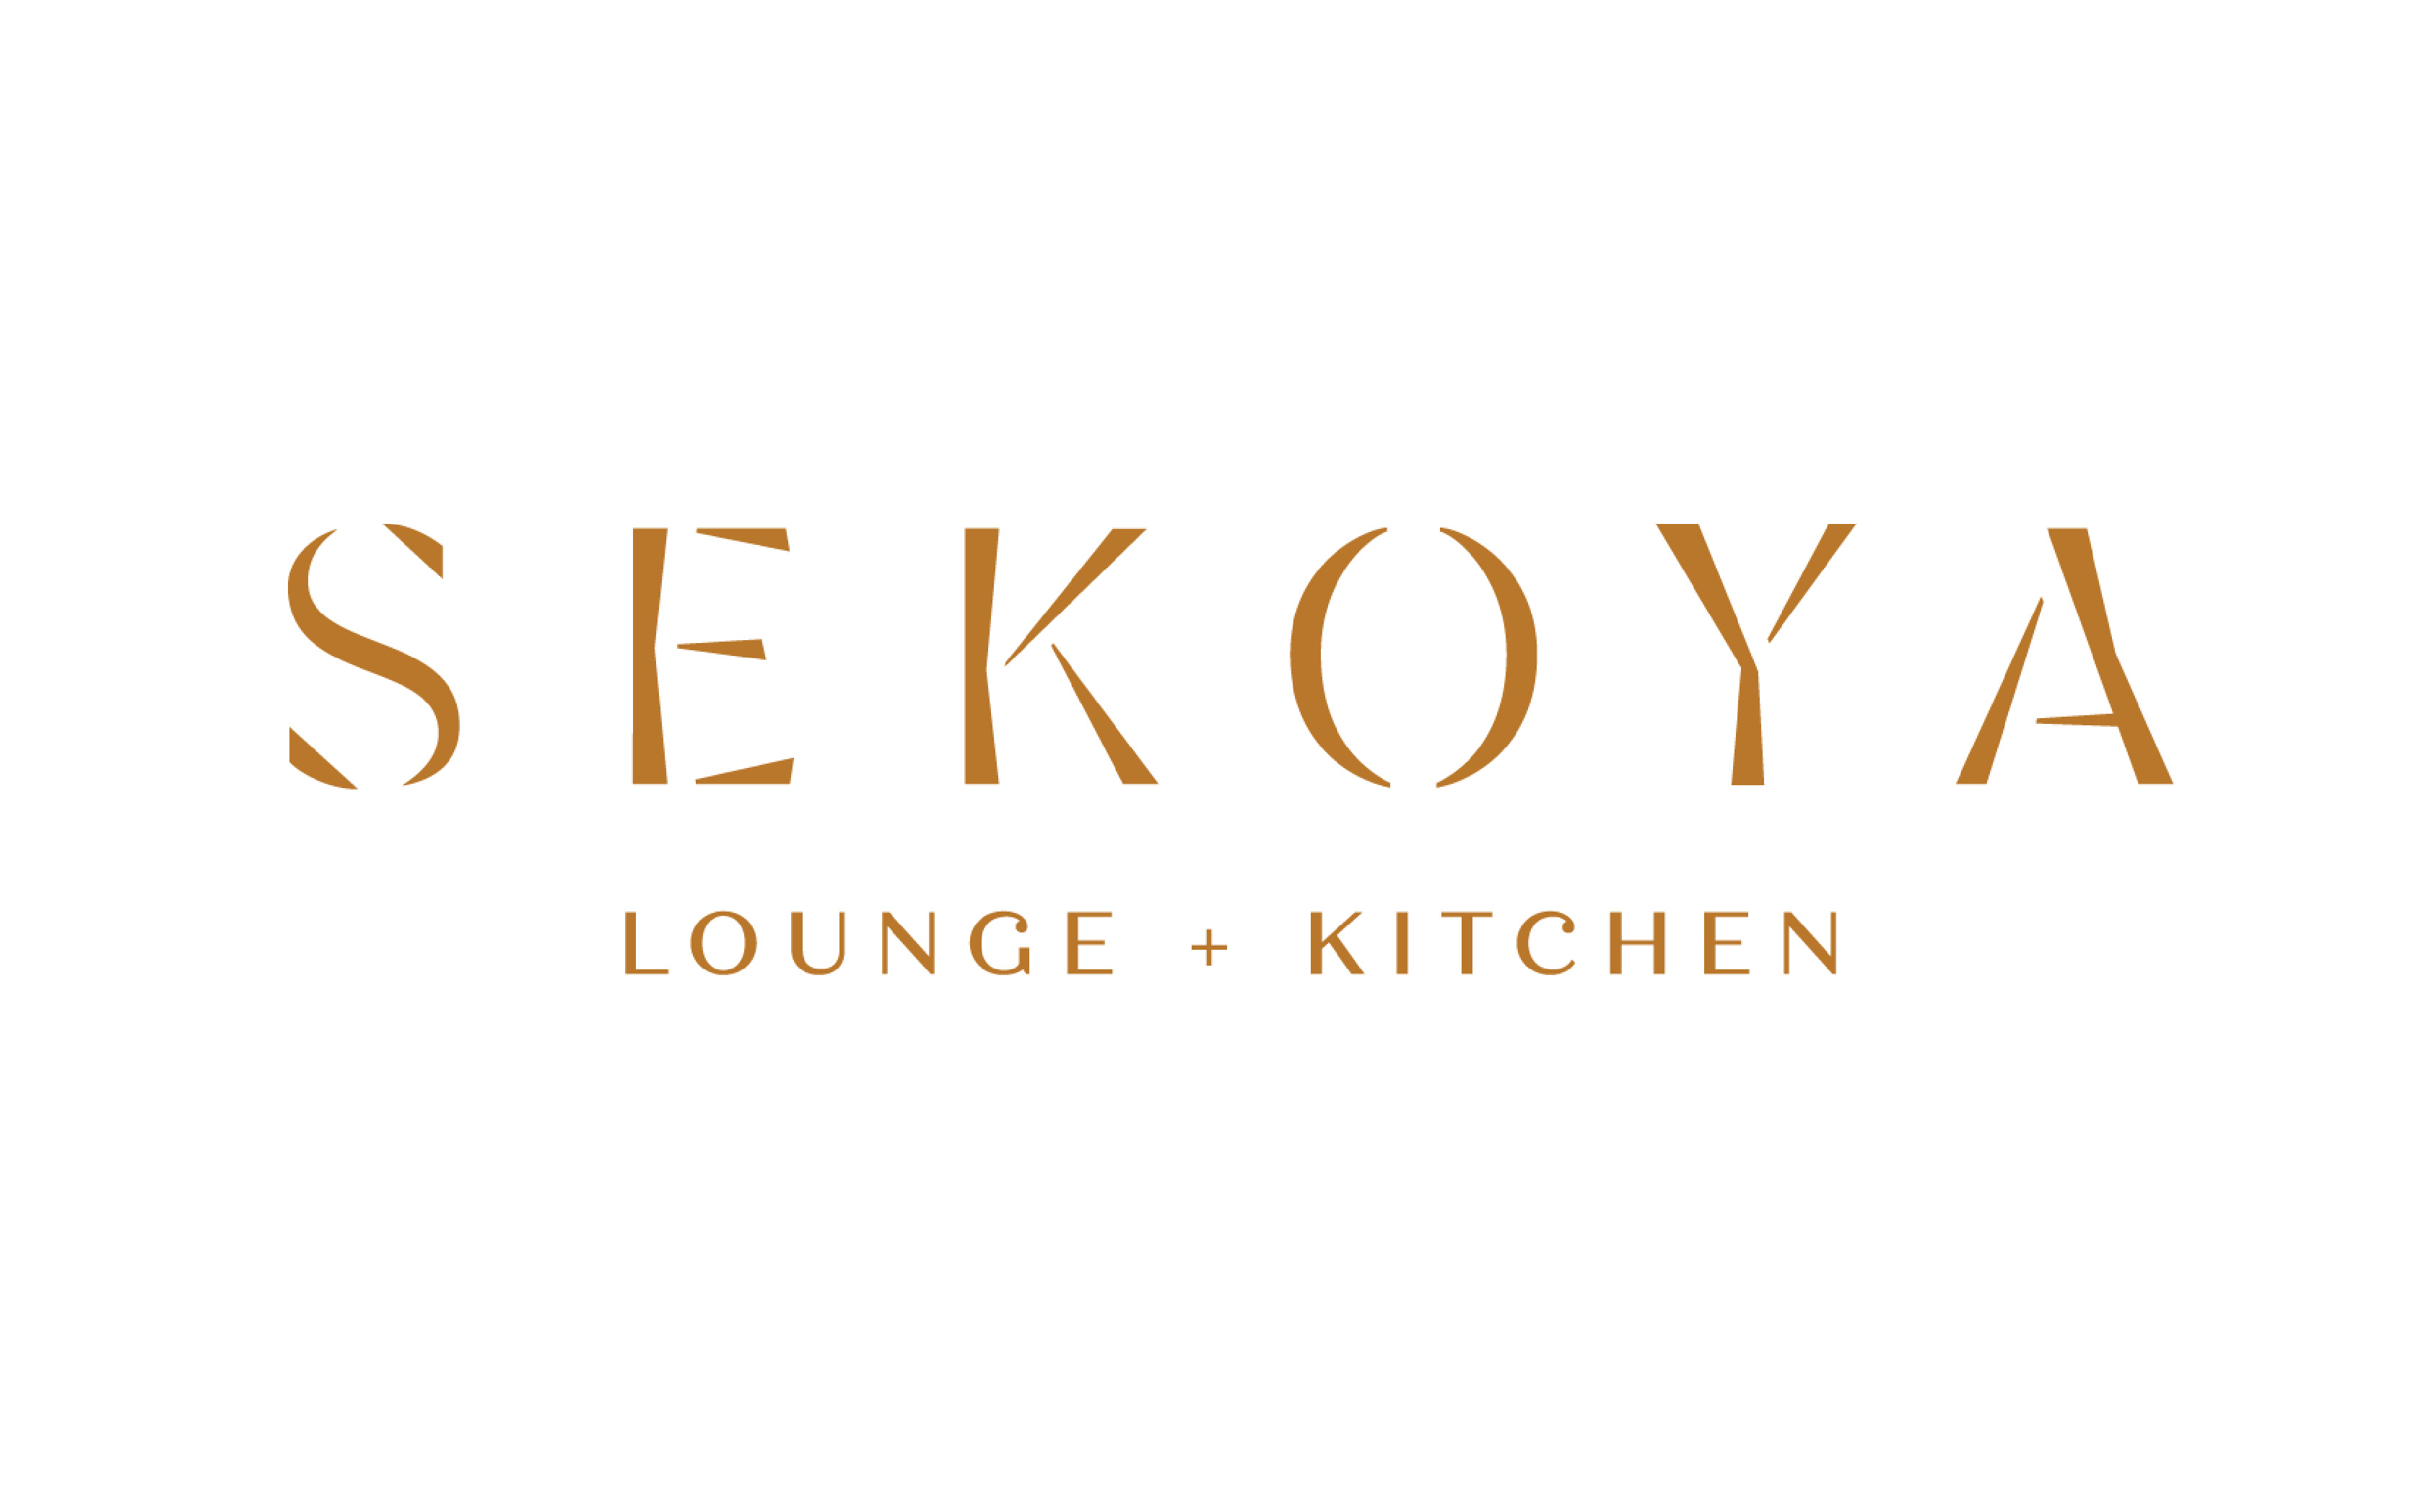 Sekoya Lounge + Kitchen